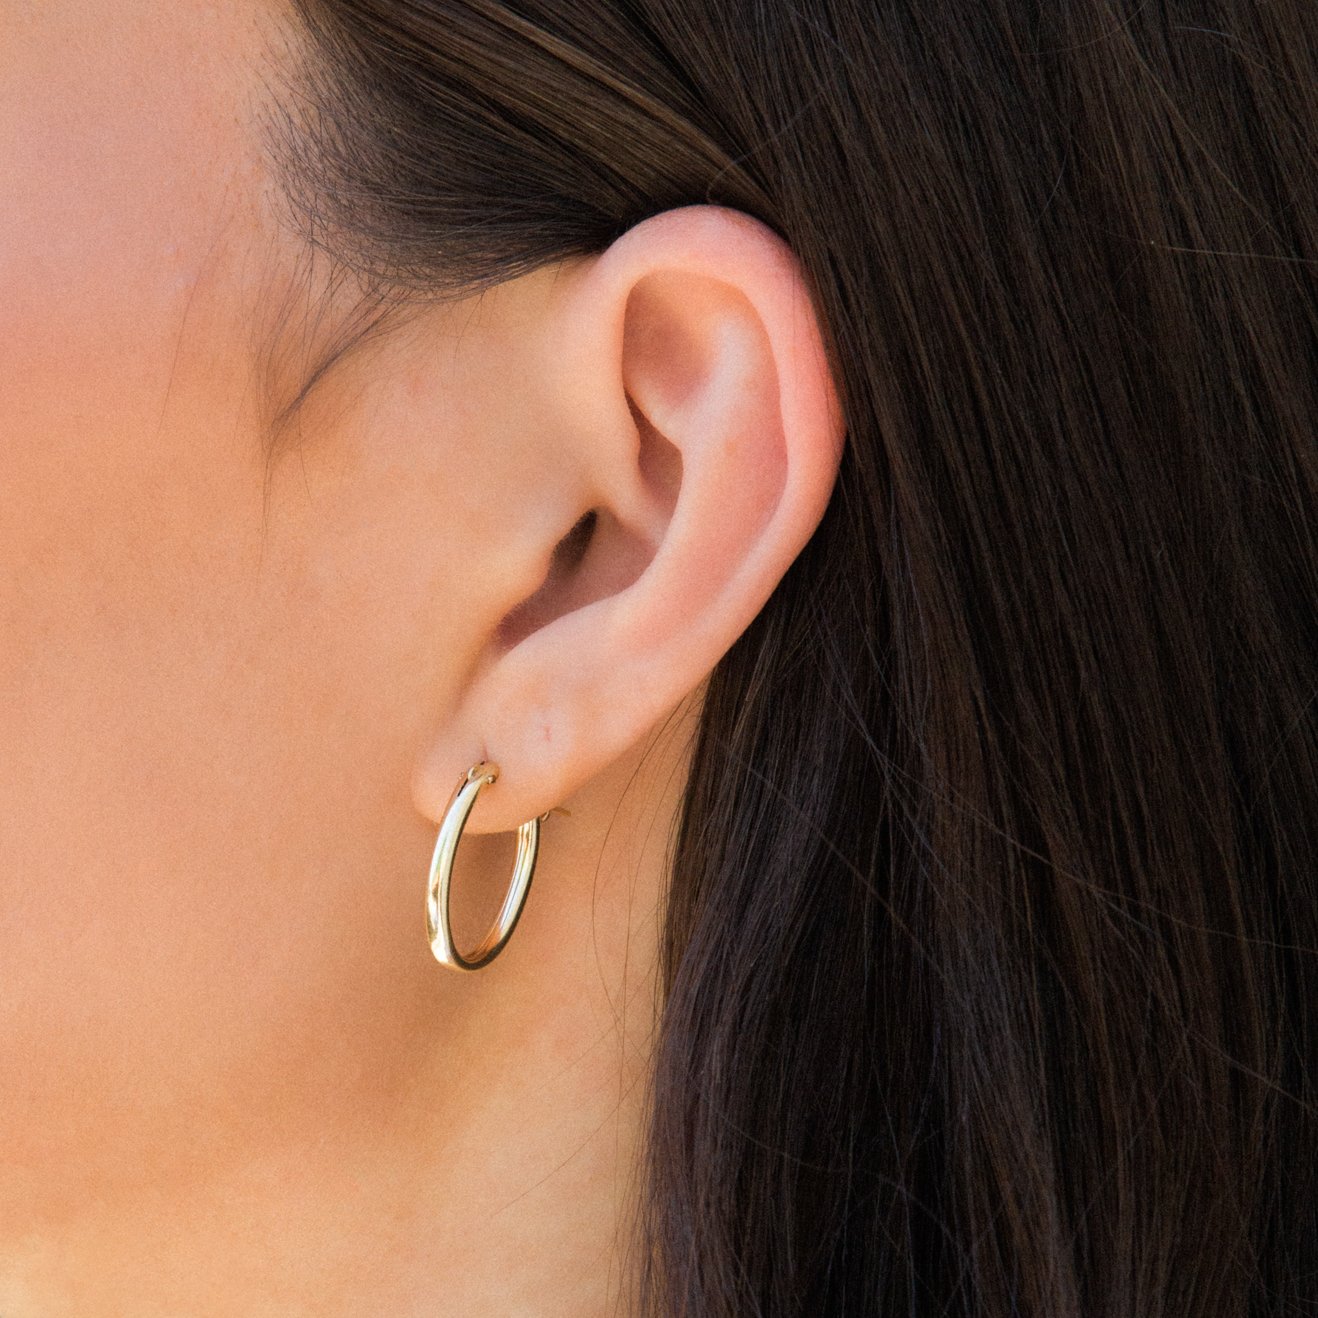 Oval Everyday Hoop Earrings by Simple & Dainty Jewelry